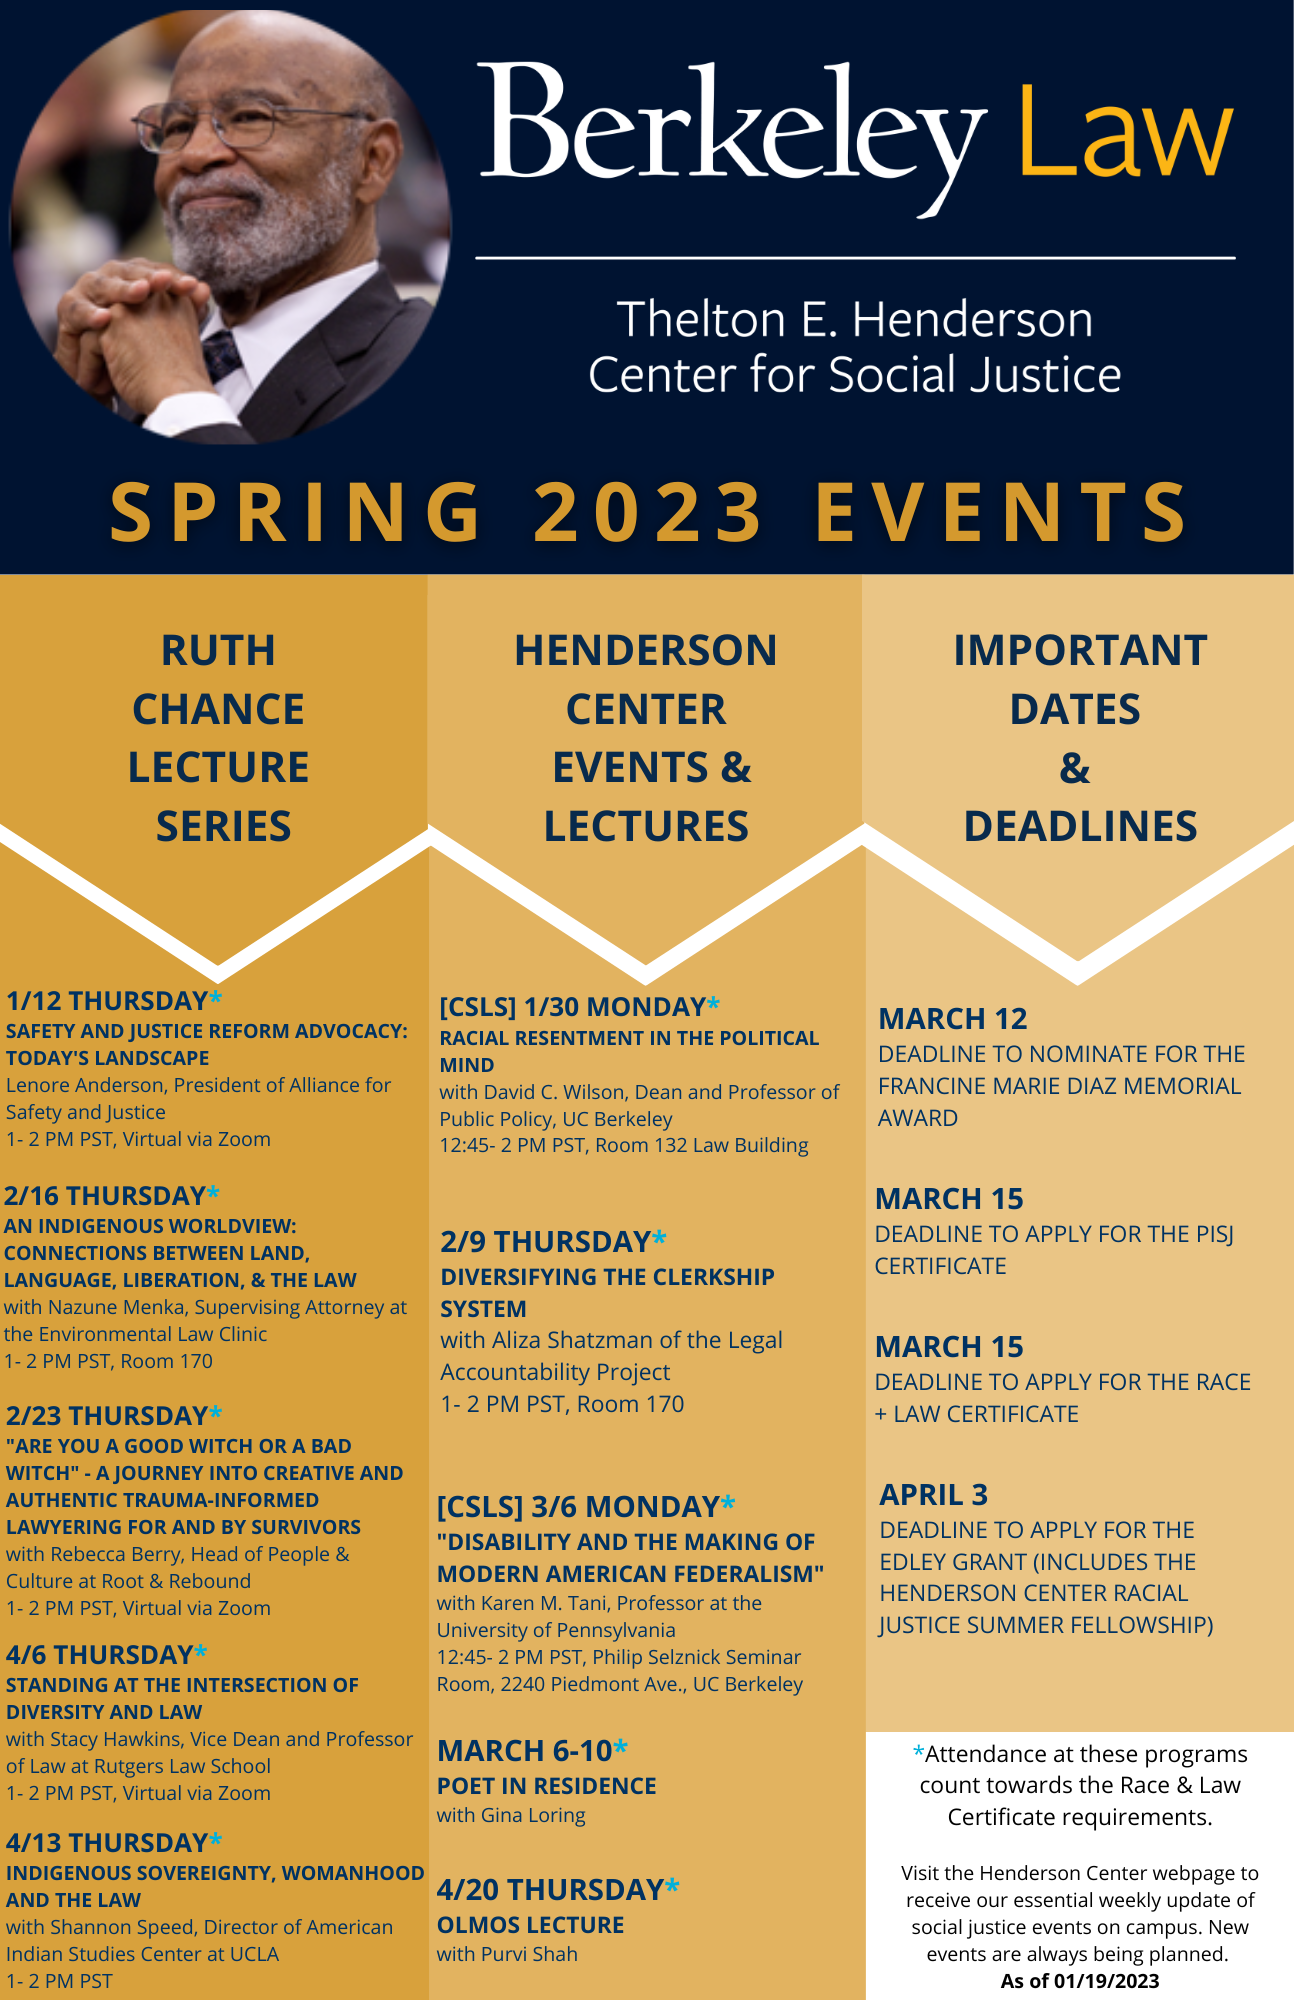 Henderson Center events calendar for spring 2023